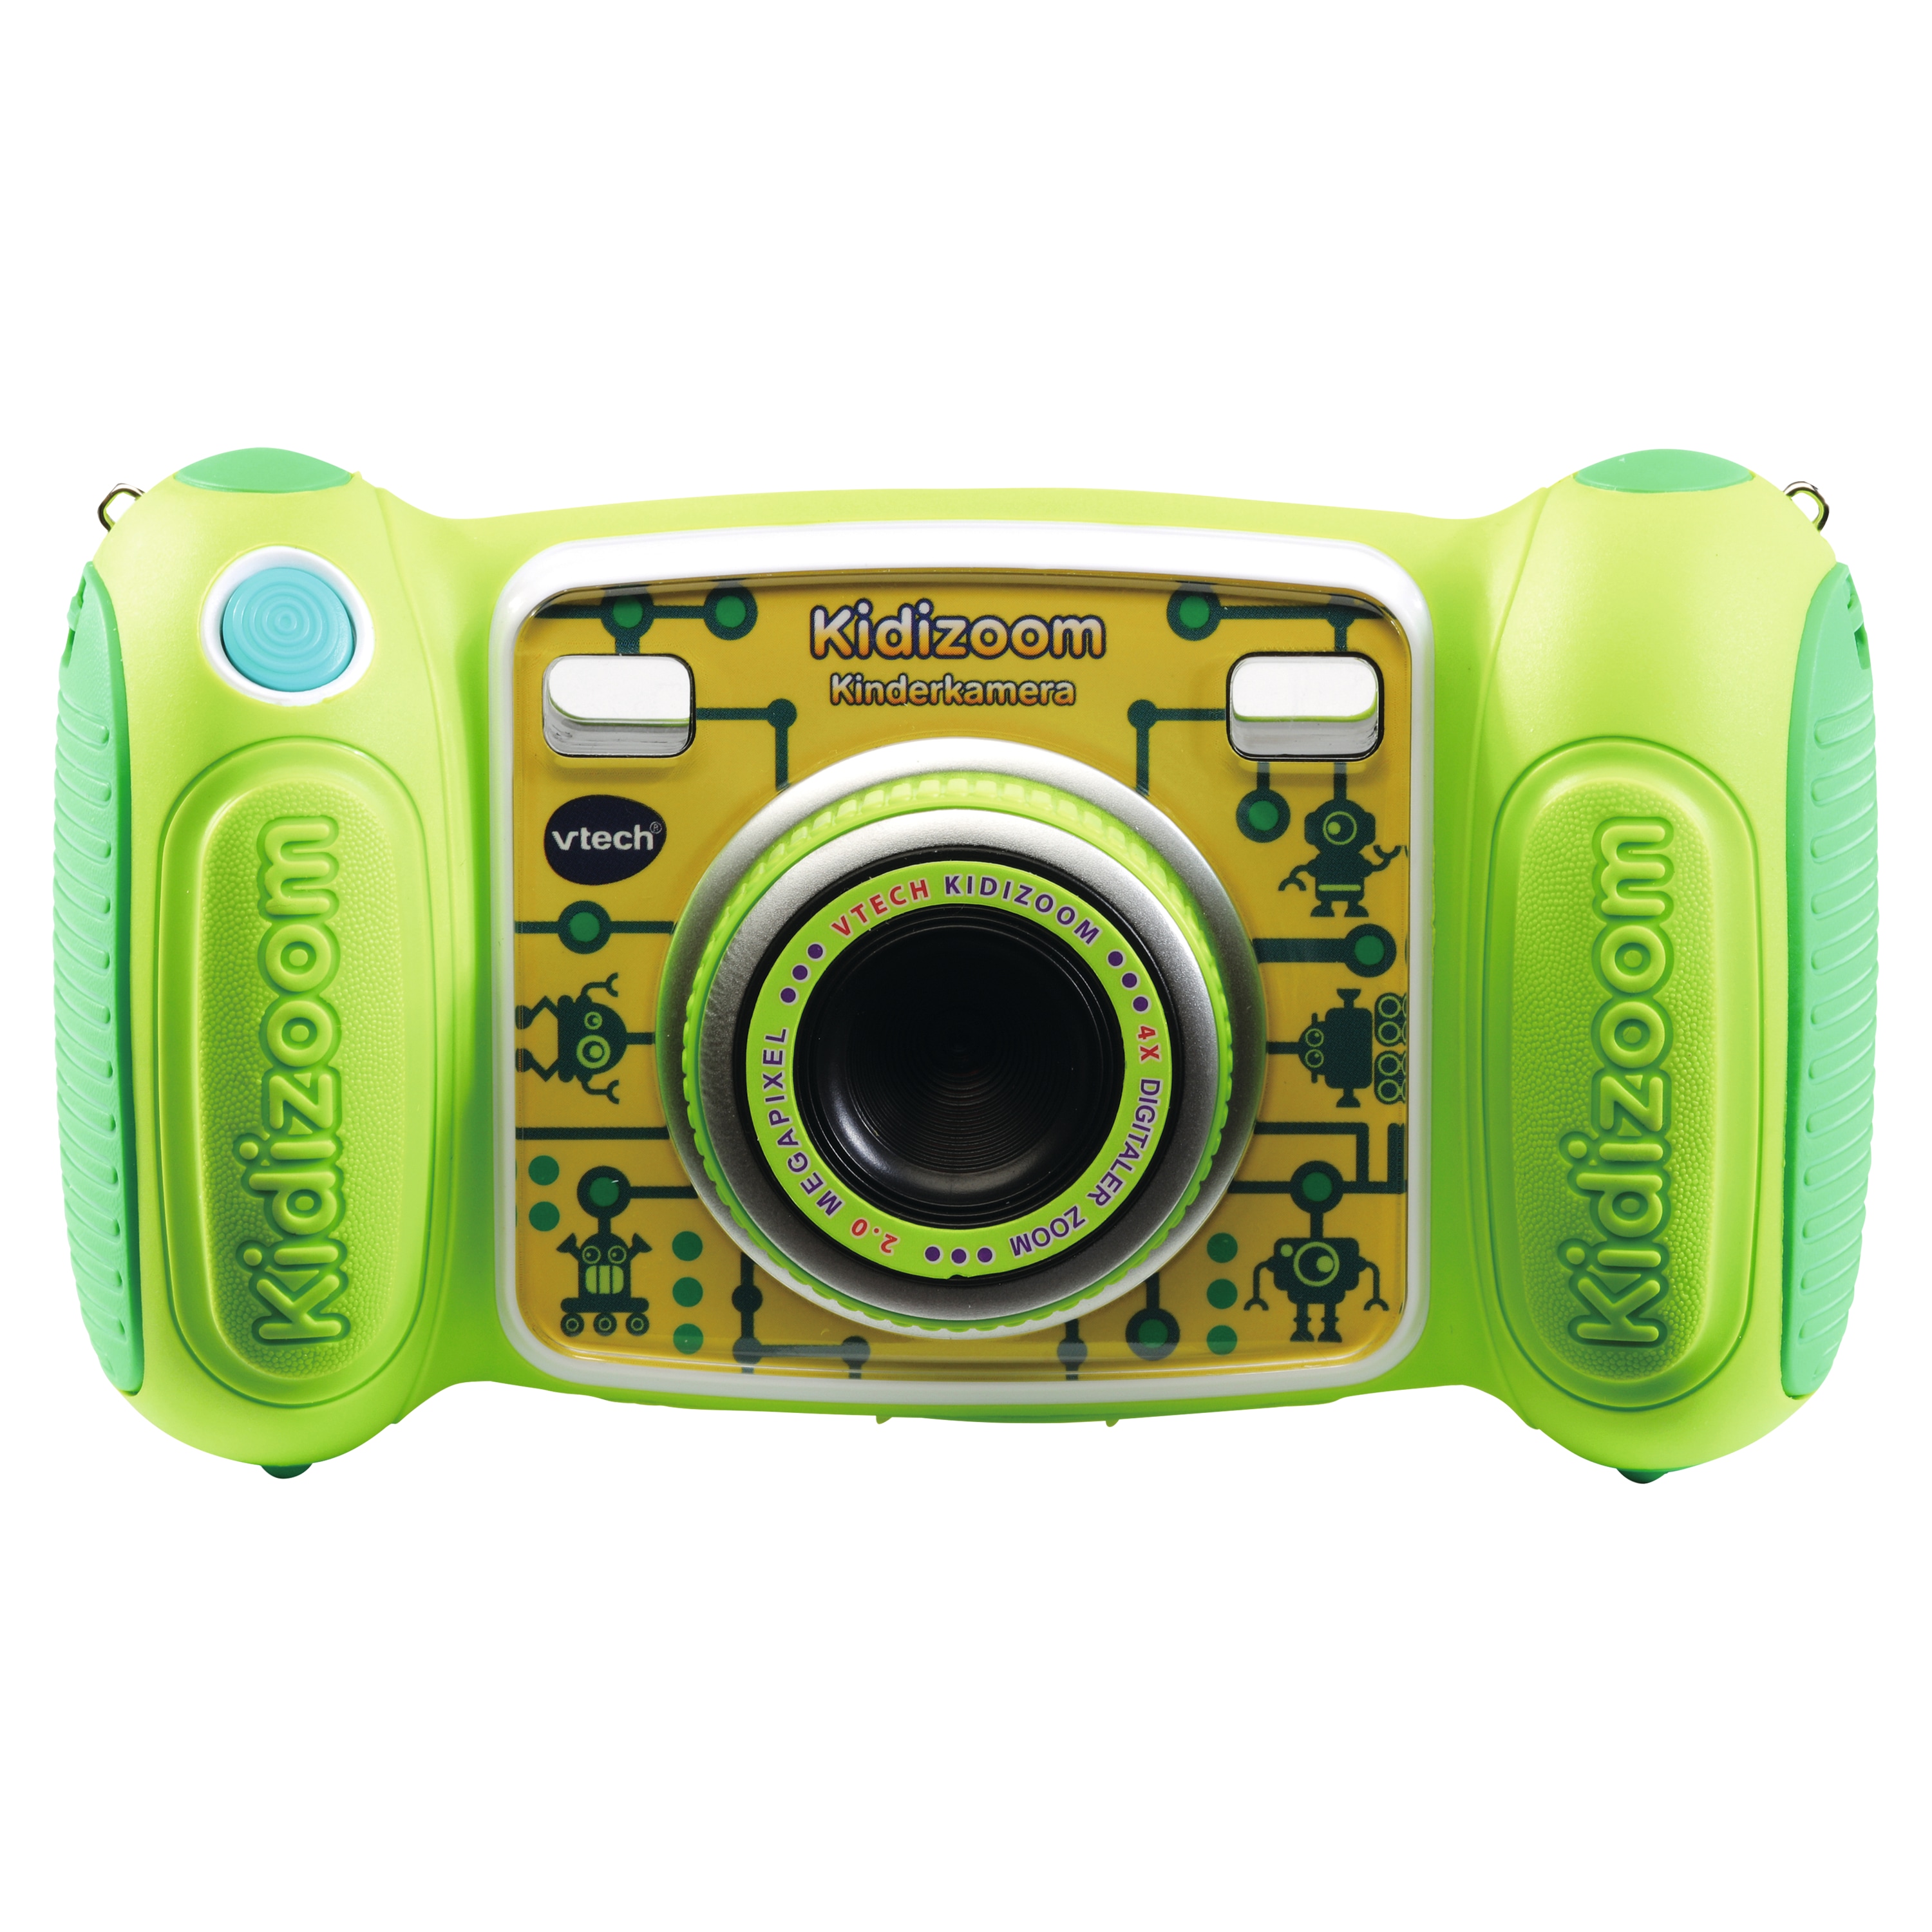 VTECH S41010 Kidizoom Kinder-Digitalkamera, großes 1,8'' Farbdisplay, 2.0 Megapixel Sensor, robustes Gehäuse, viele lustige Fotoeffekte und Rahmen